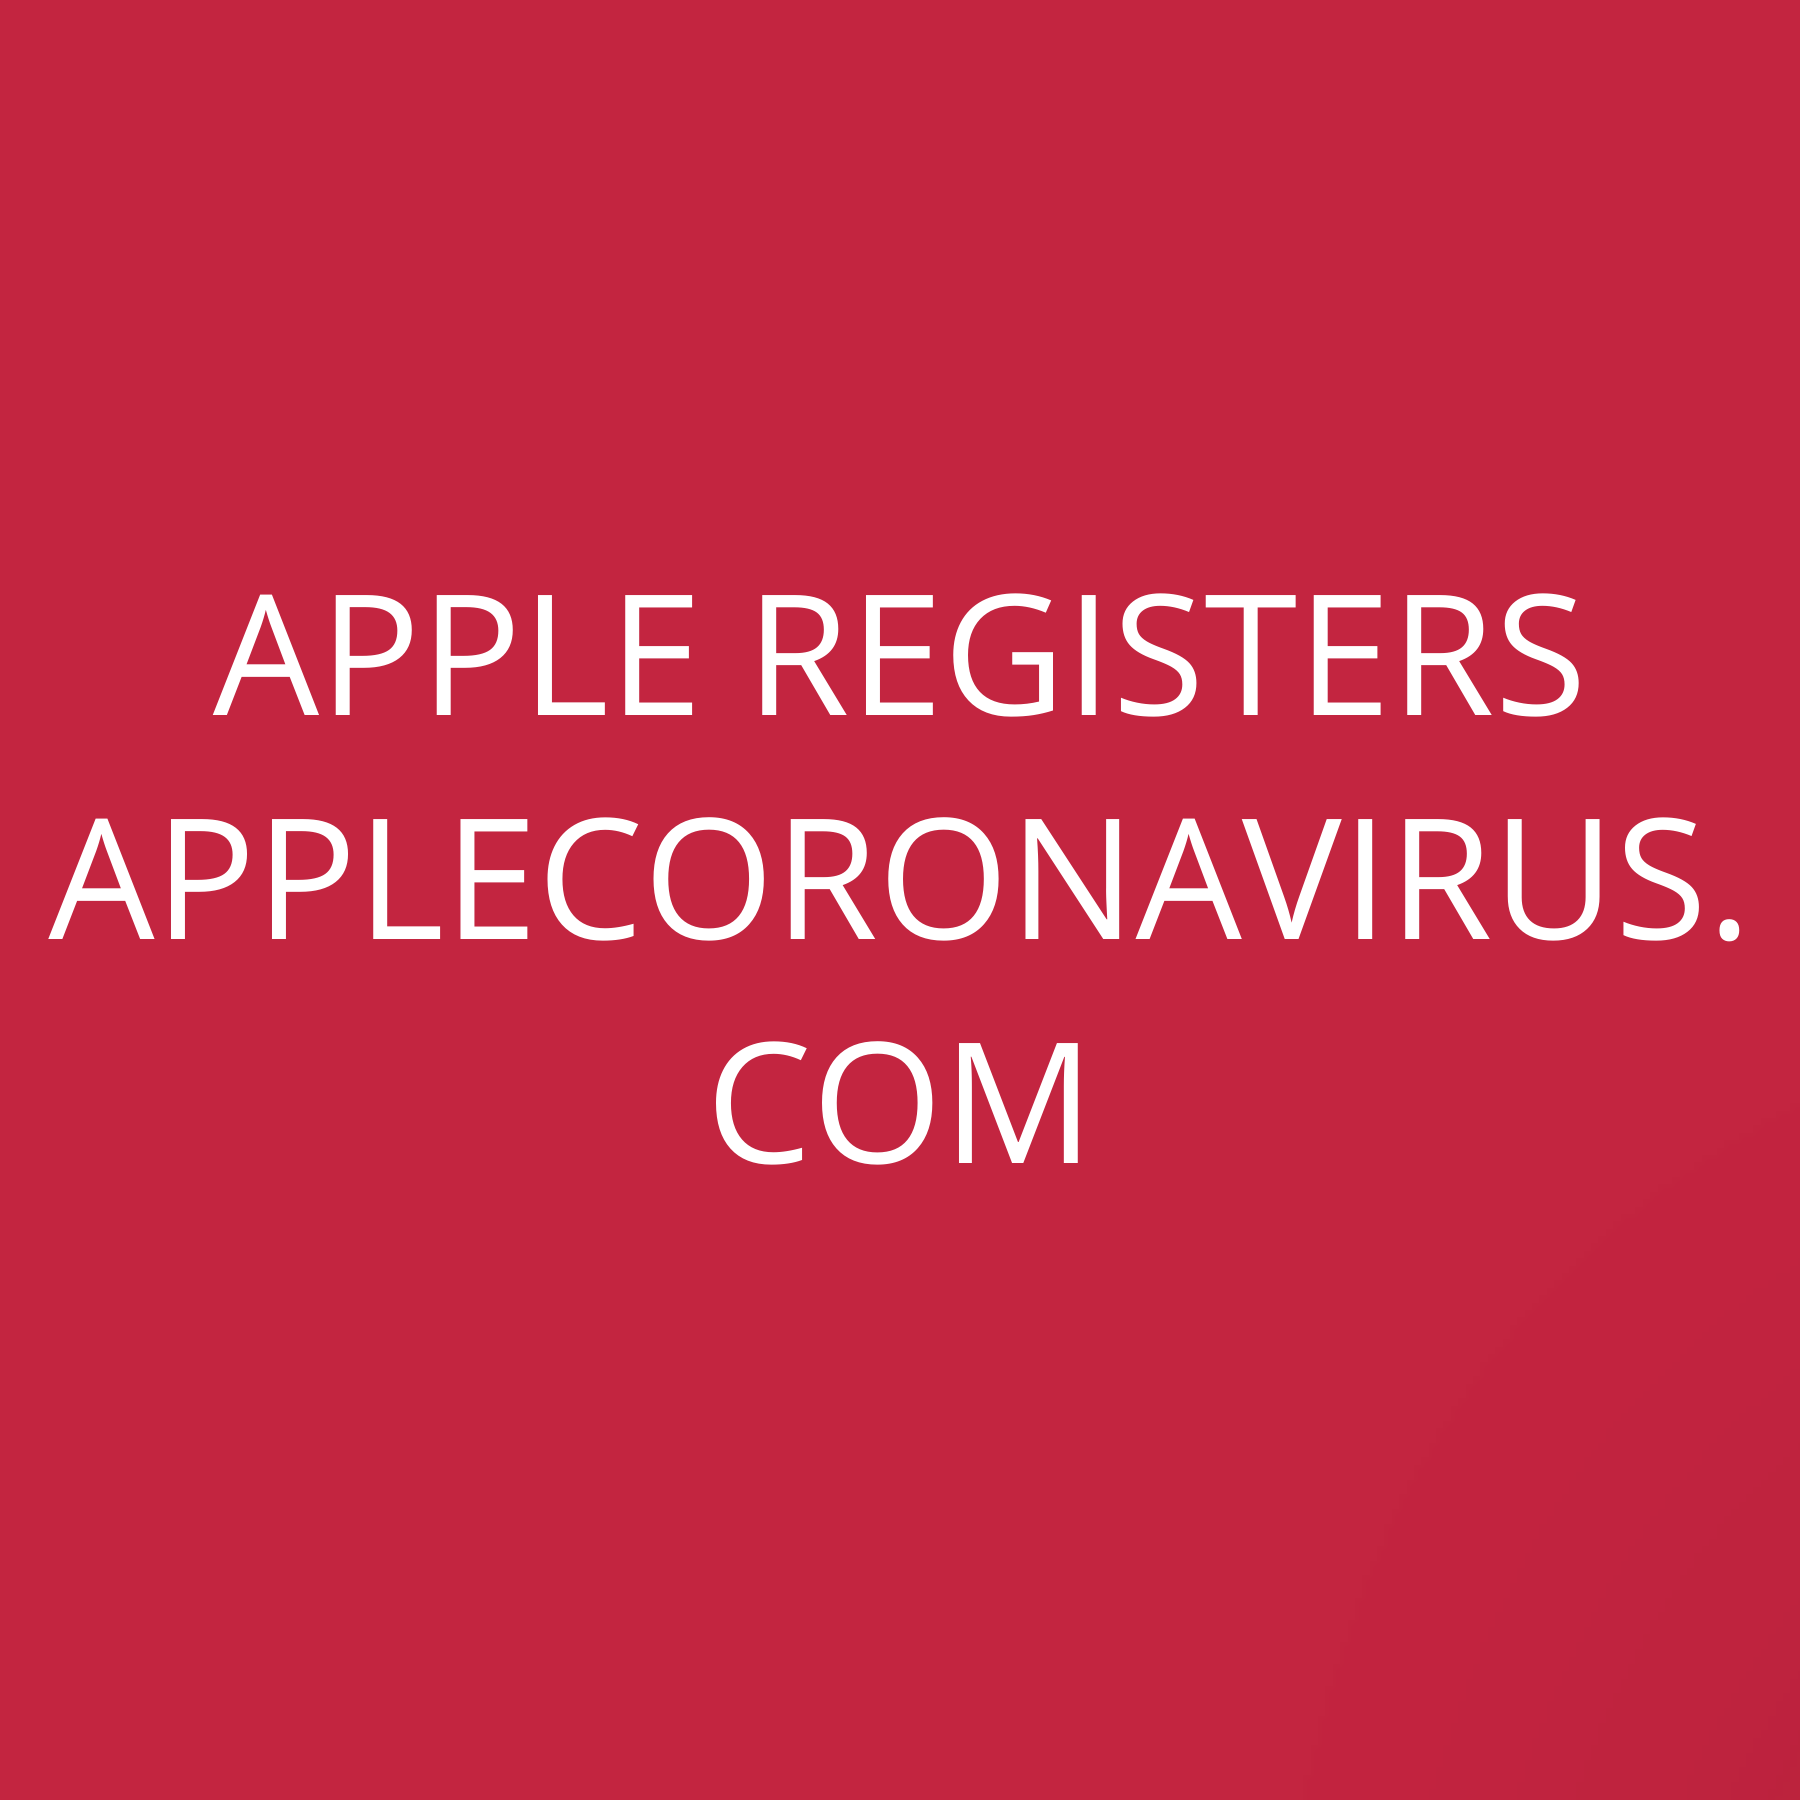 Apple registers AppleCoronaVirus.com